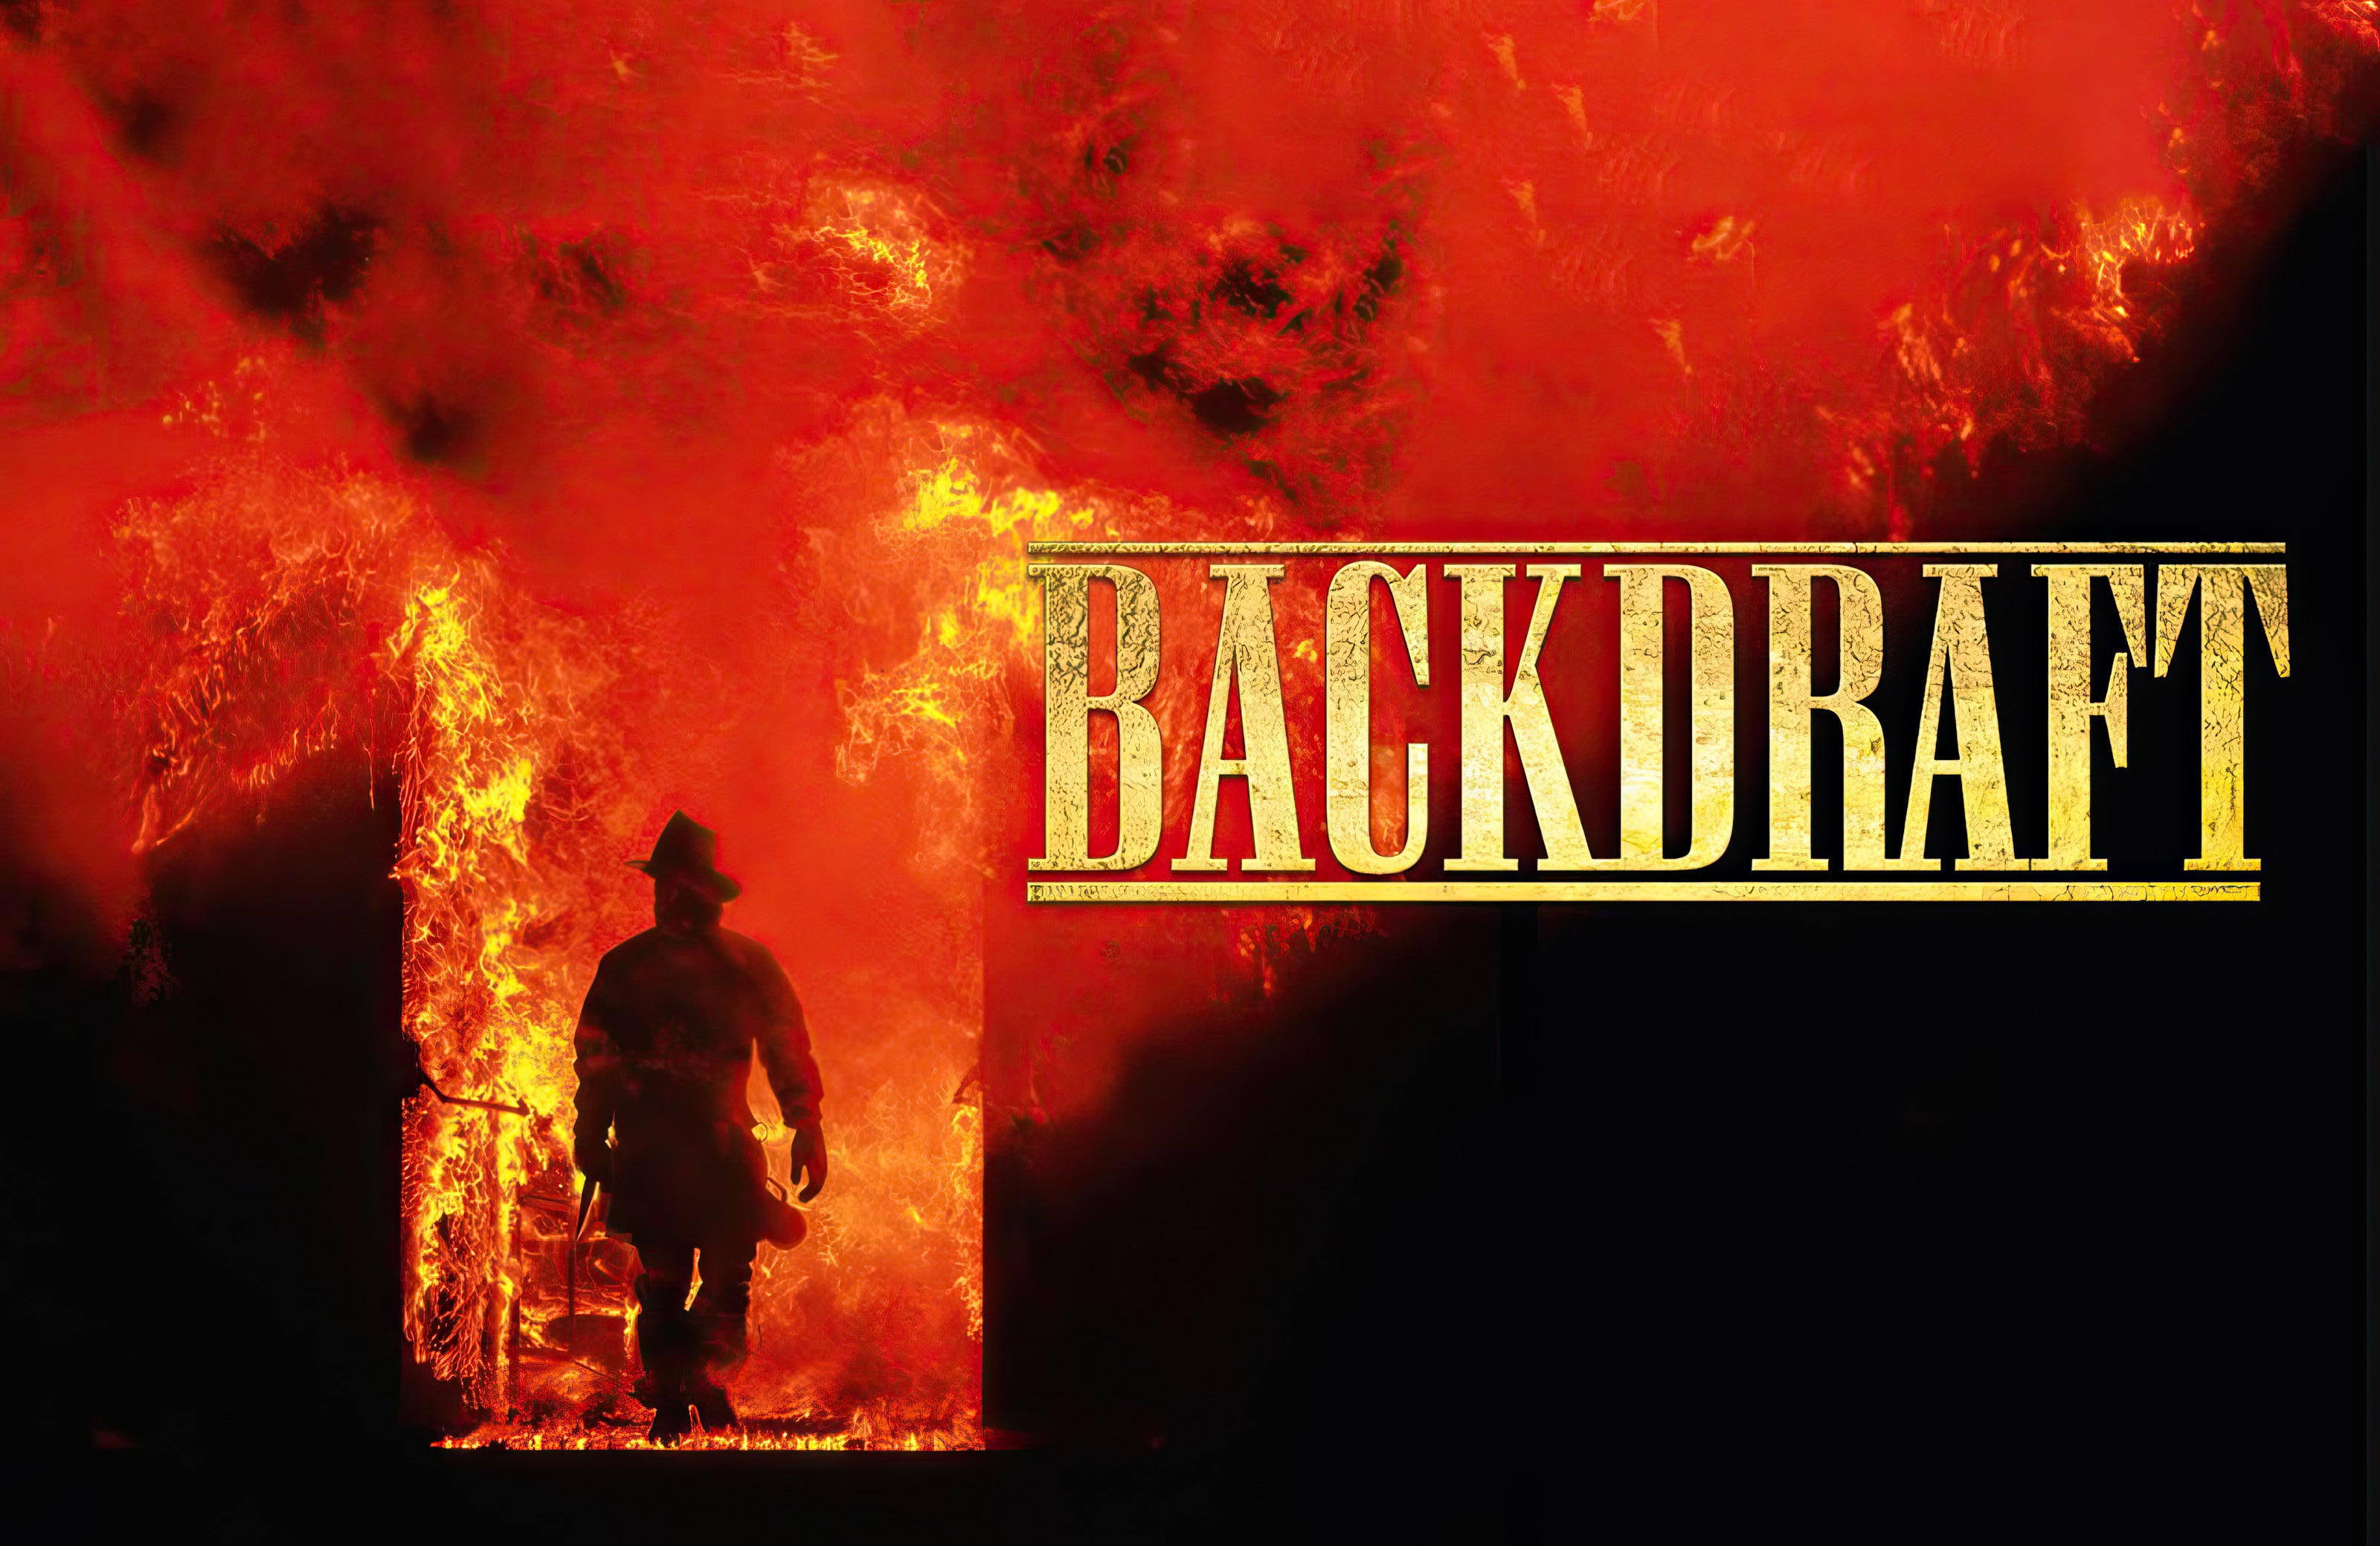 Backdraft Script Screenplay - Image of Movie Poster